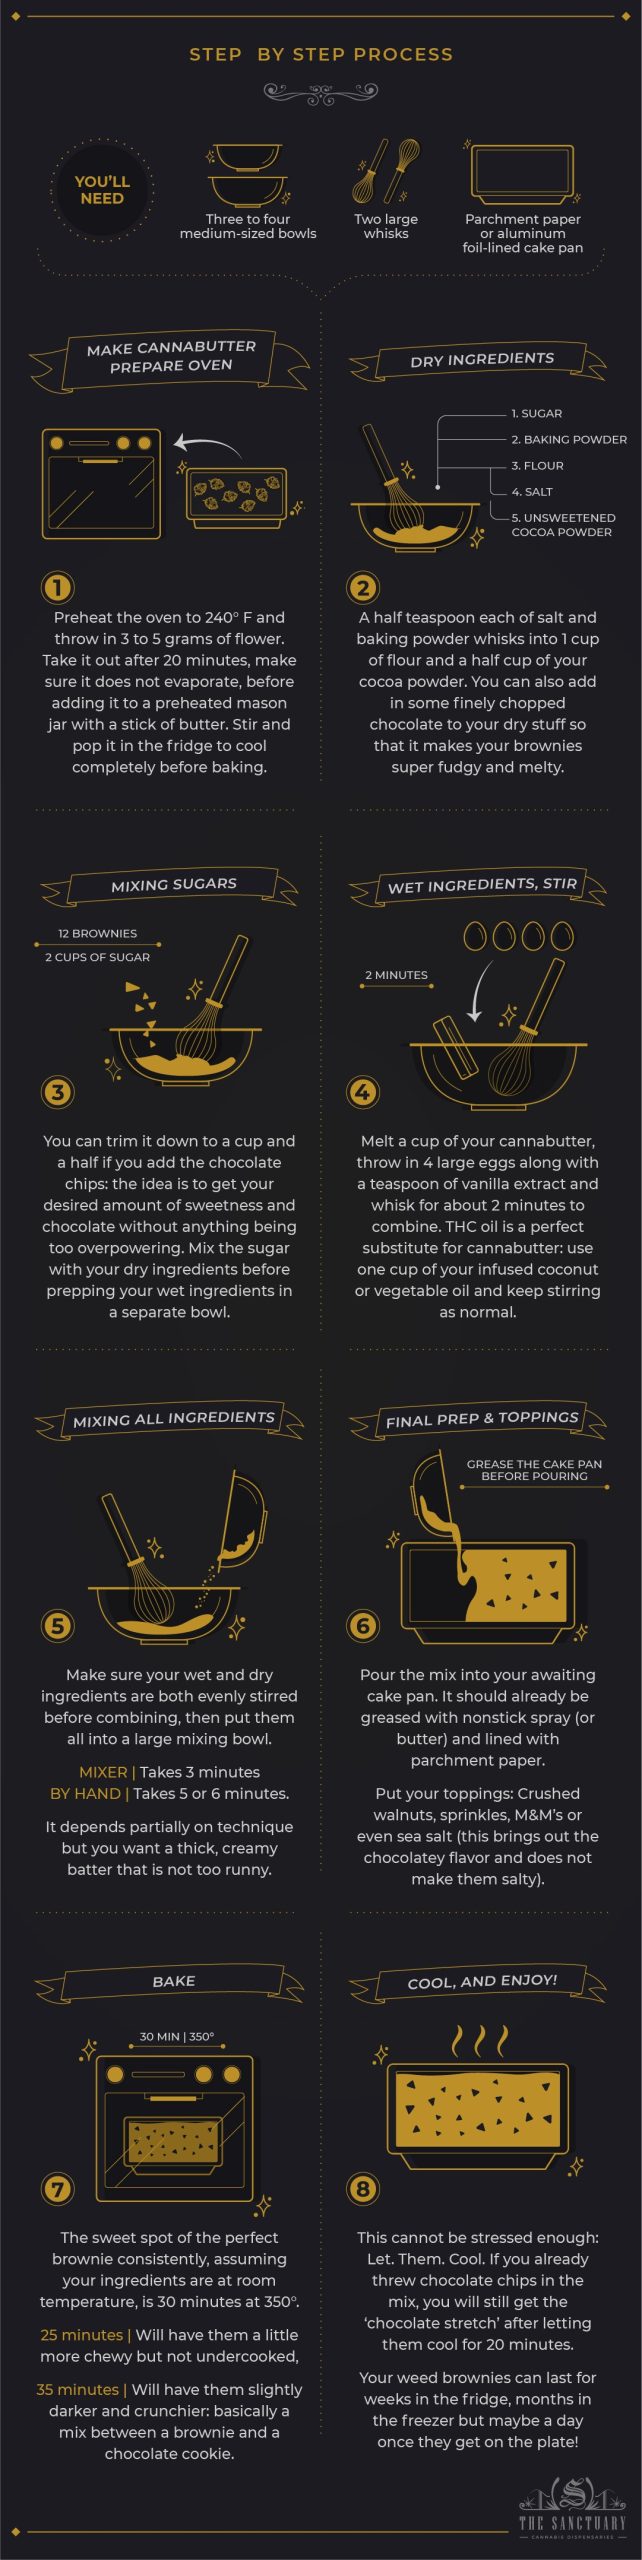 How to Bake Weed Brownies - Step by step process 